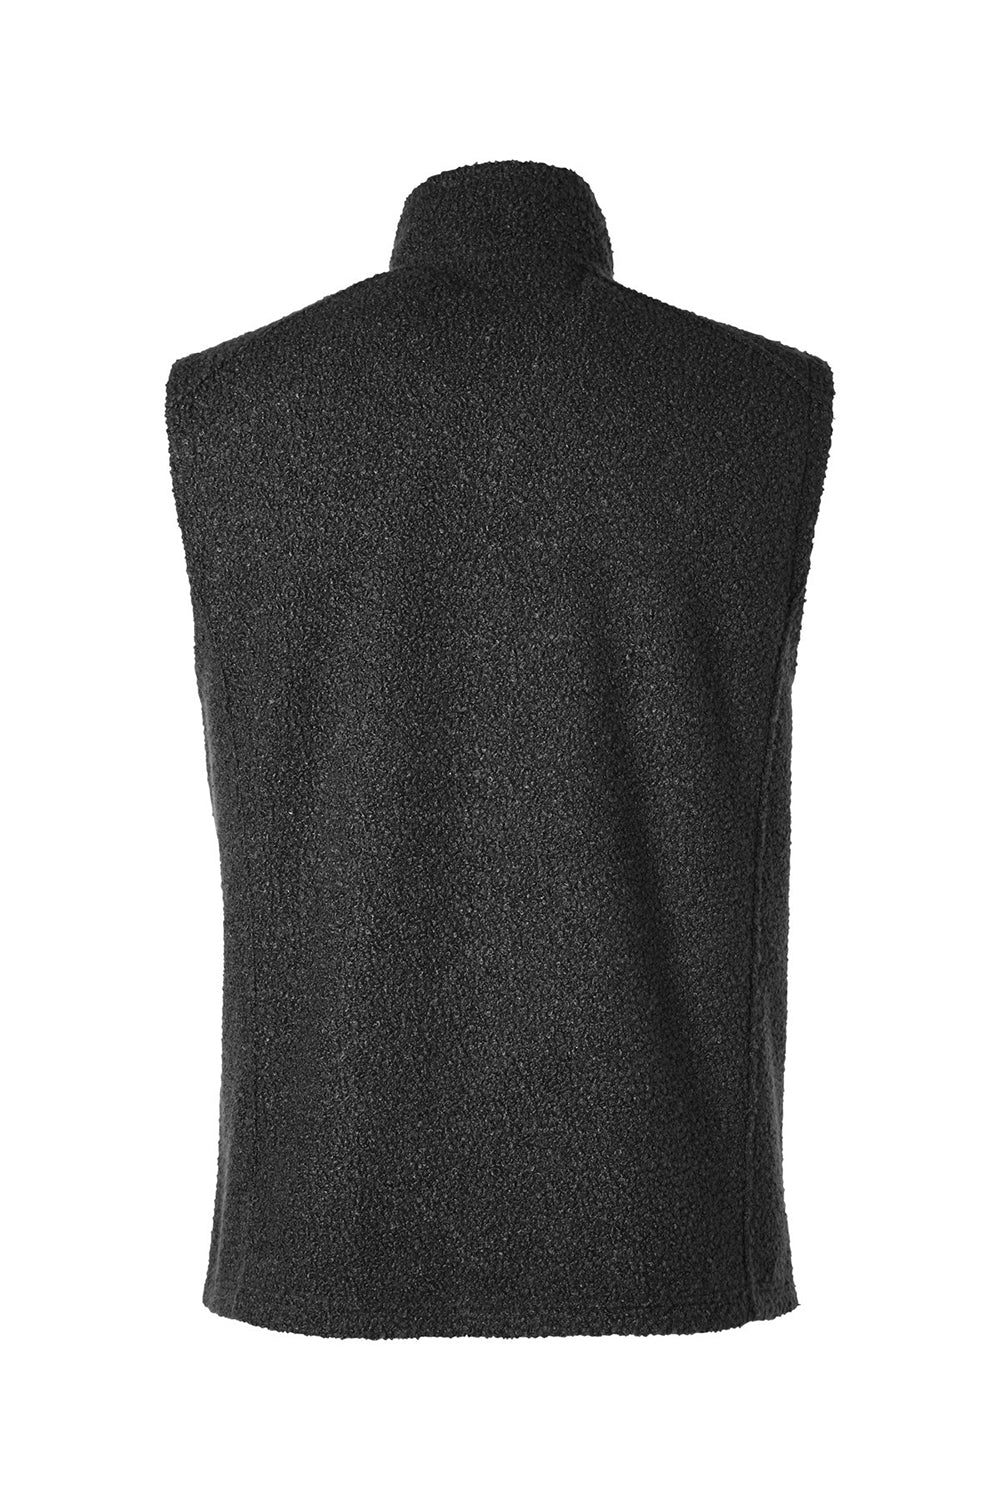 North End NE714 Mens Aura Sweater Fleece Full Zip Vest Black Flat Back